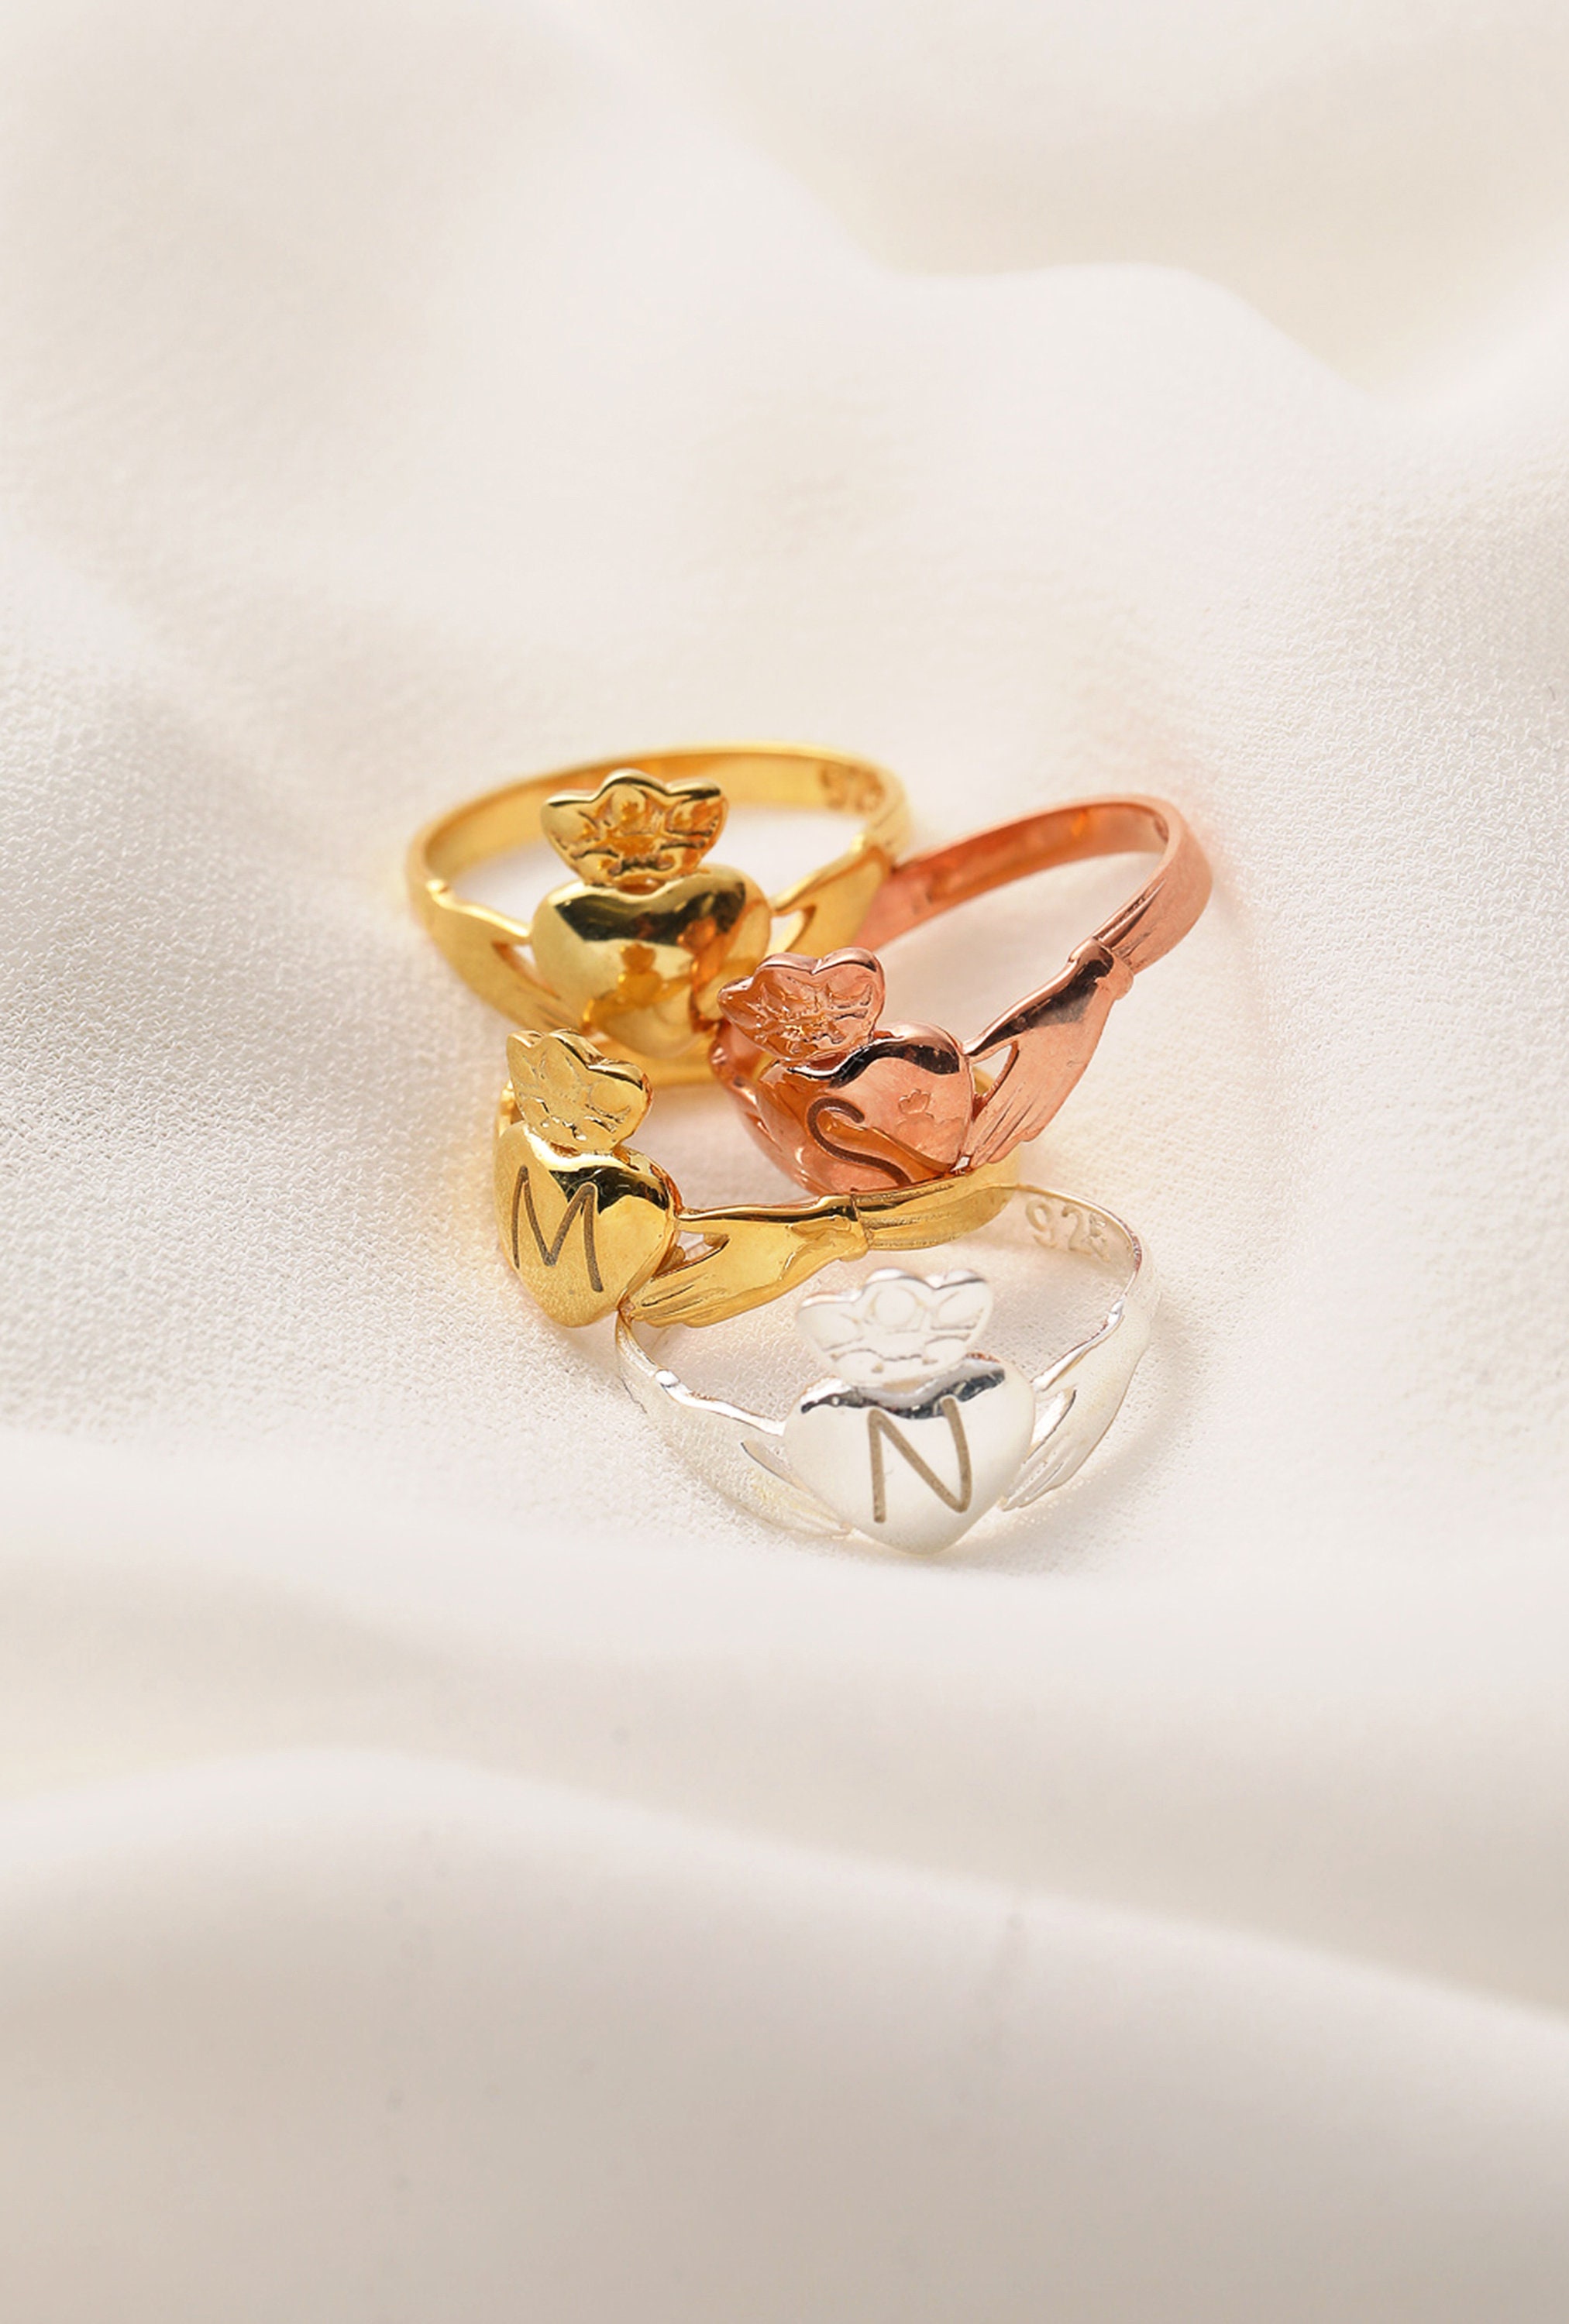 14K Gold Claddagh Ring, Tiny Celtic Irish Ring, Personalized Ring